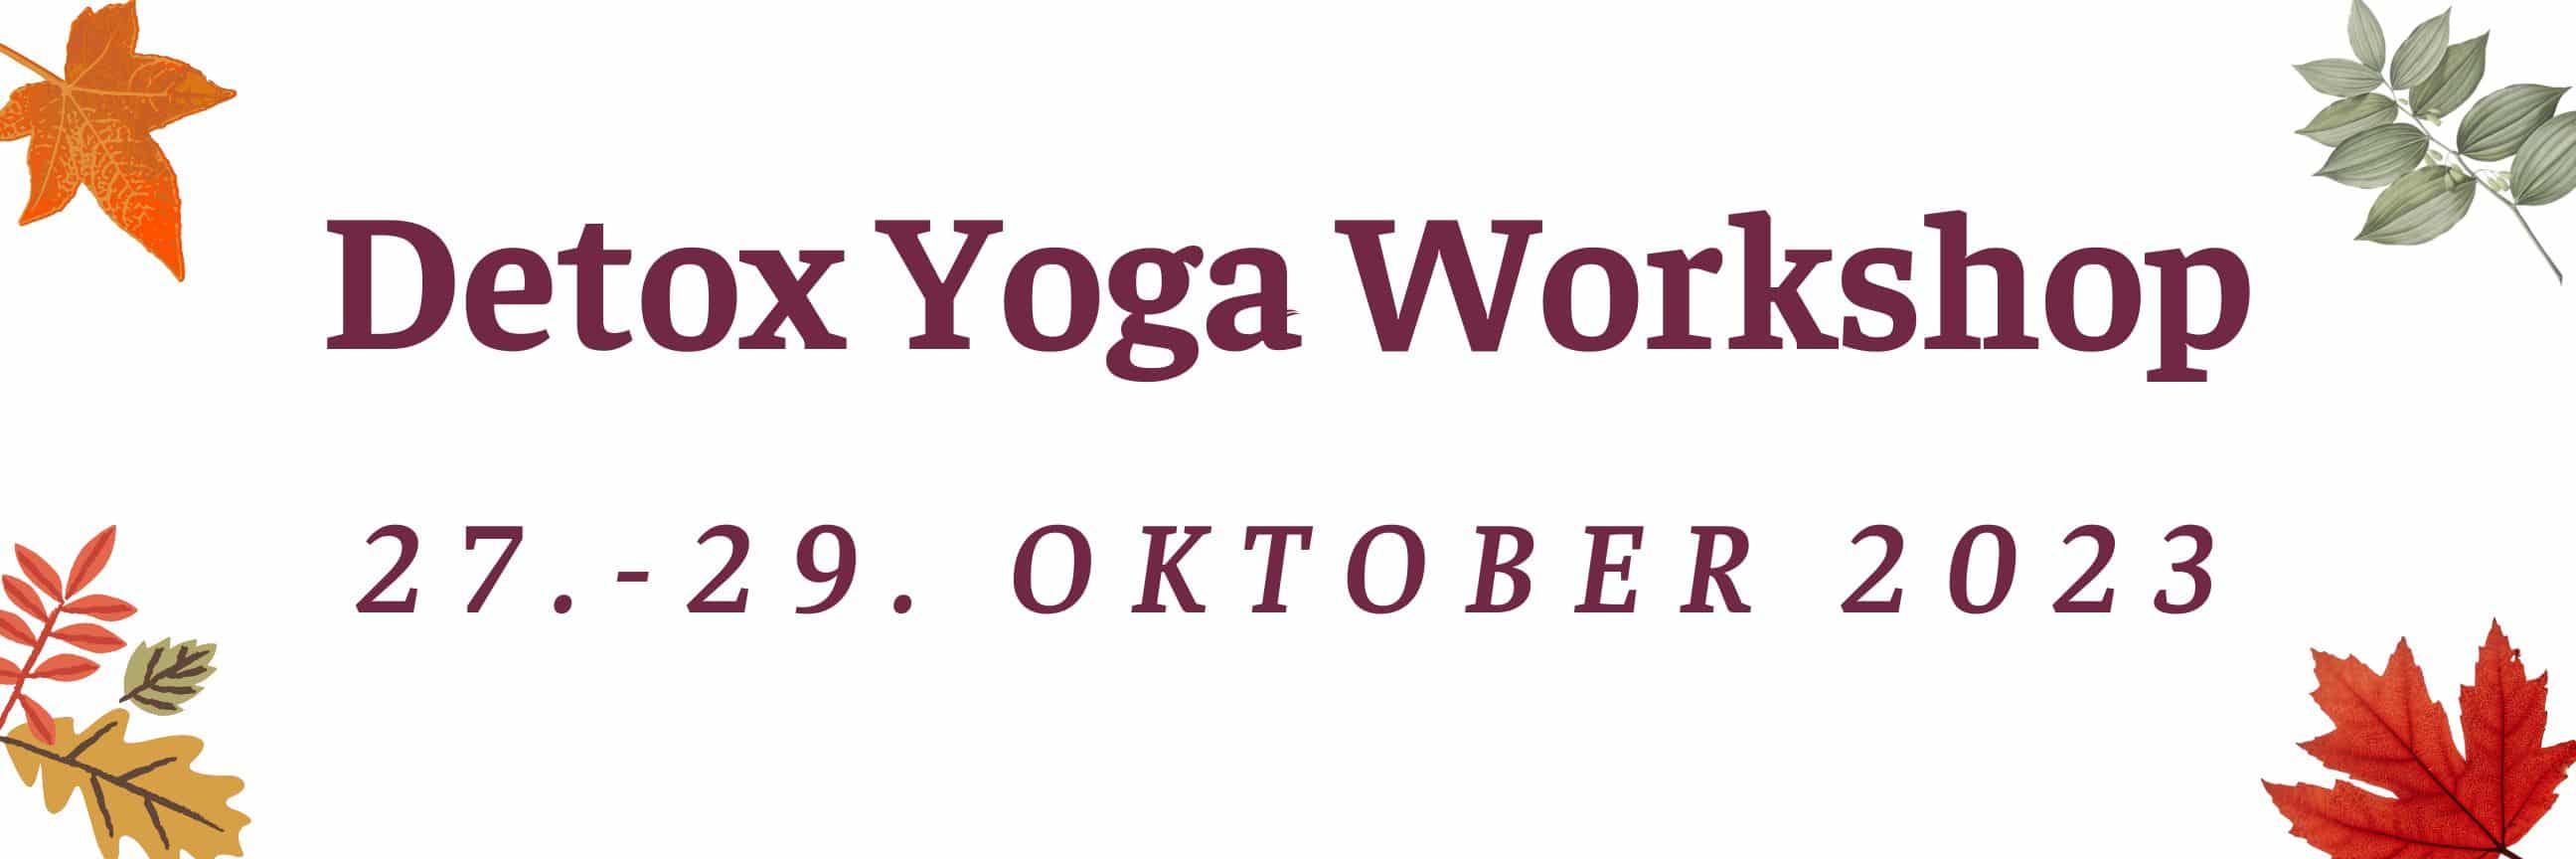 Workshop zum Detox Yoga am 27.-29. Oktober 2023